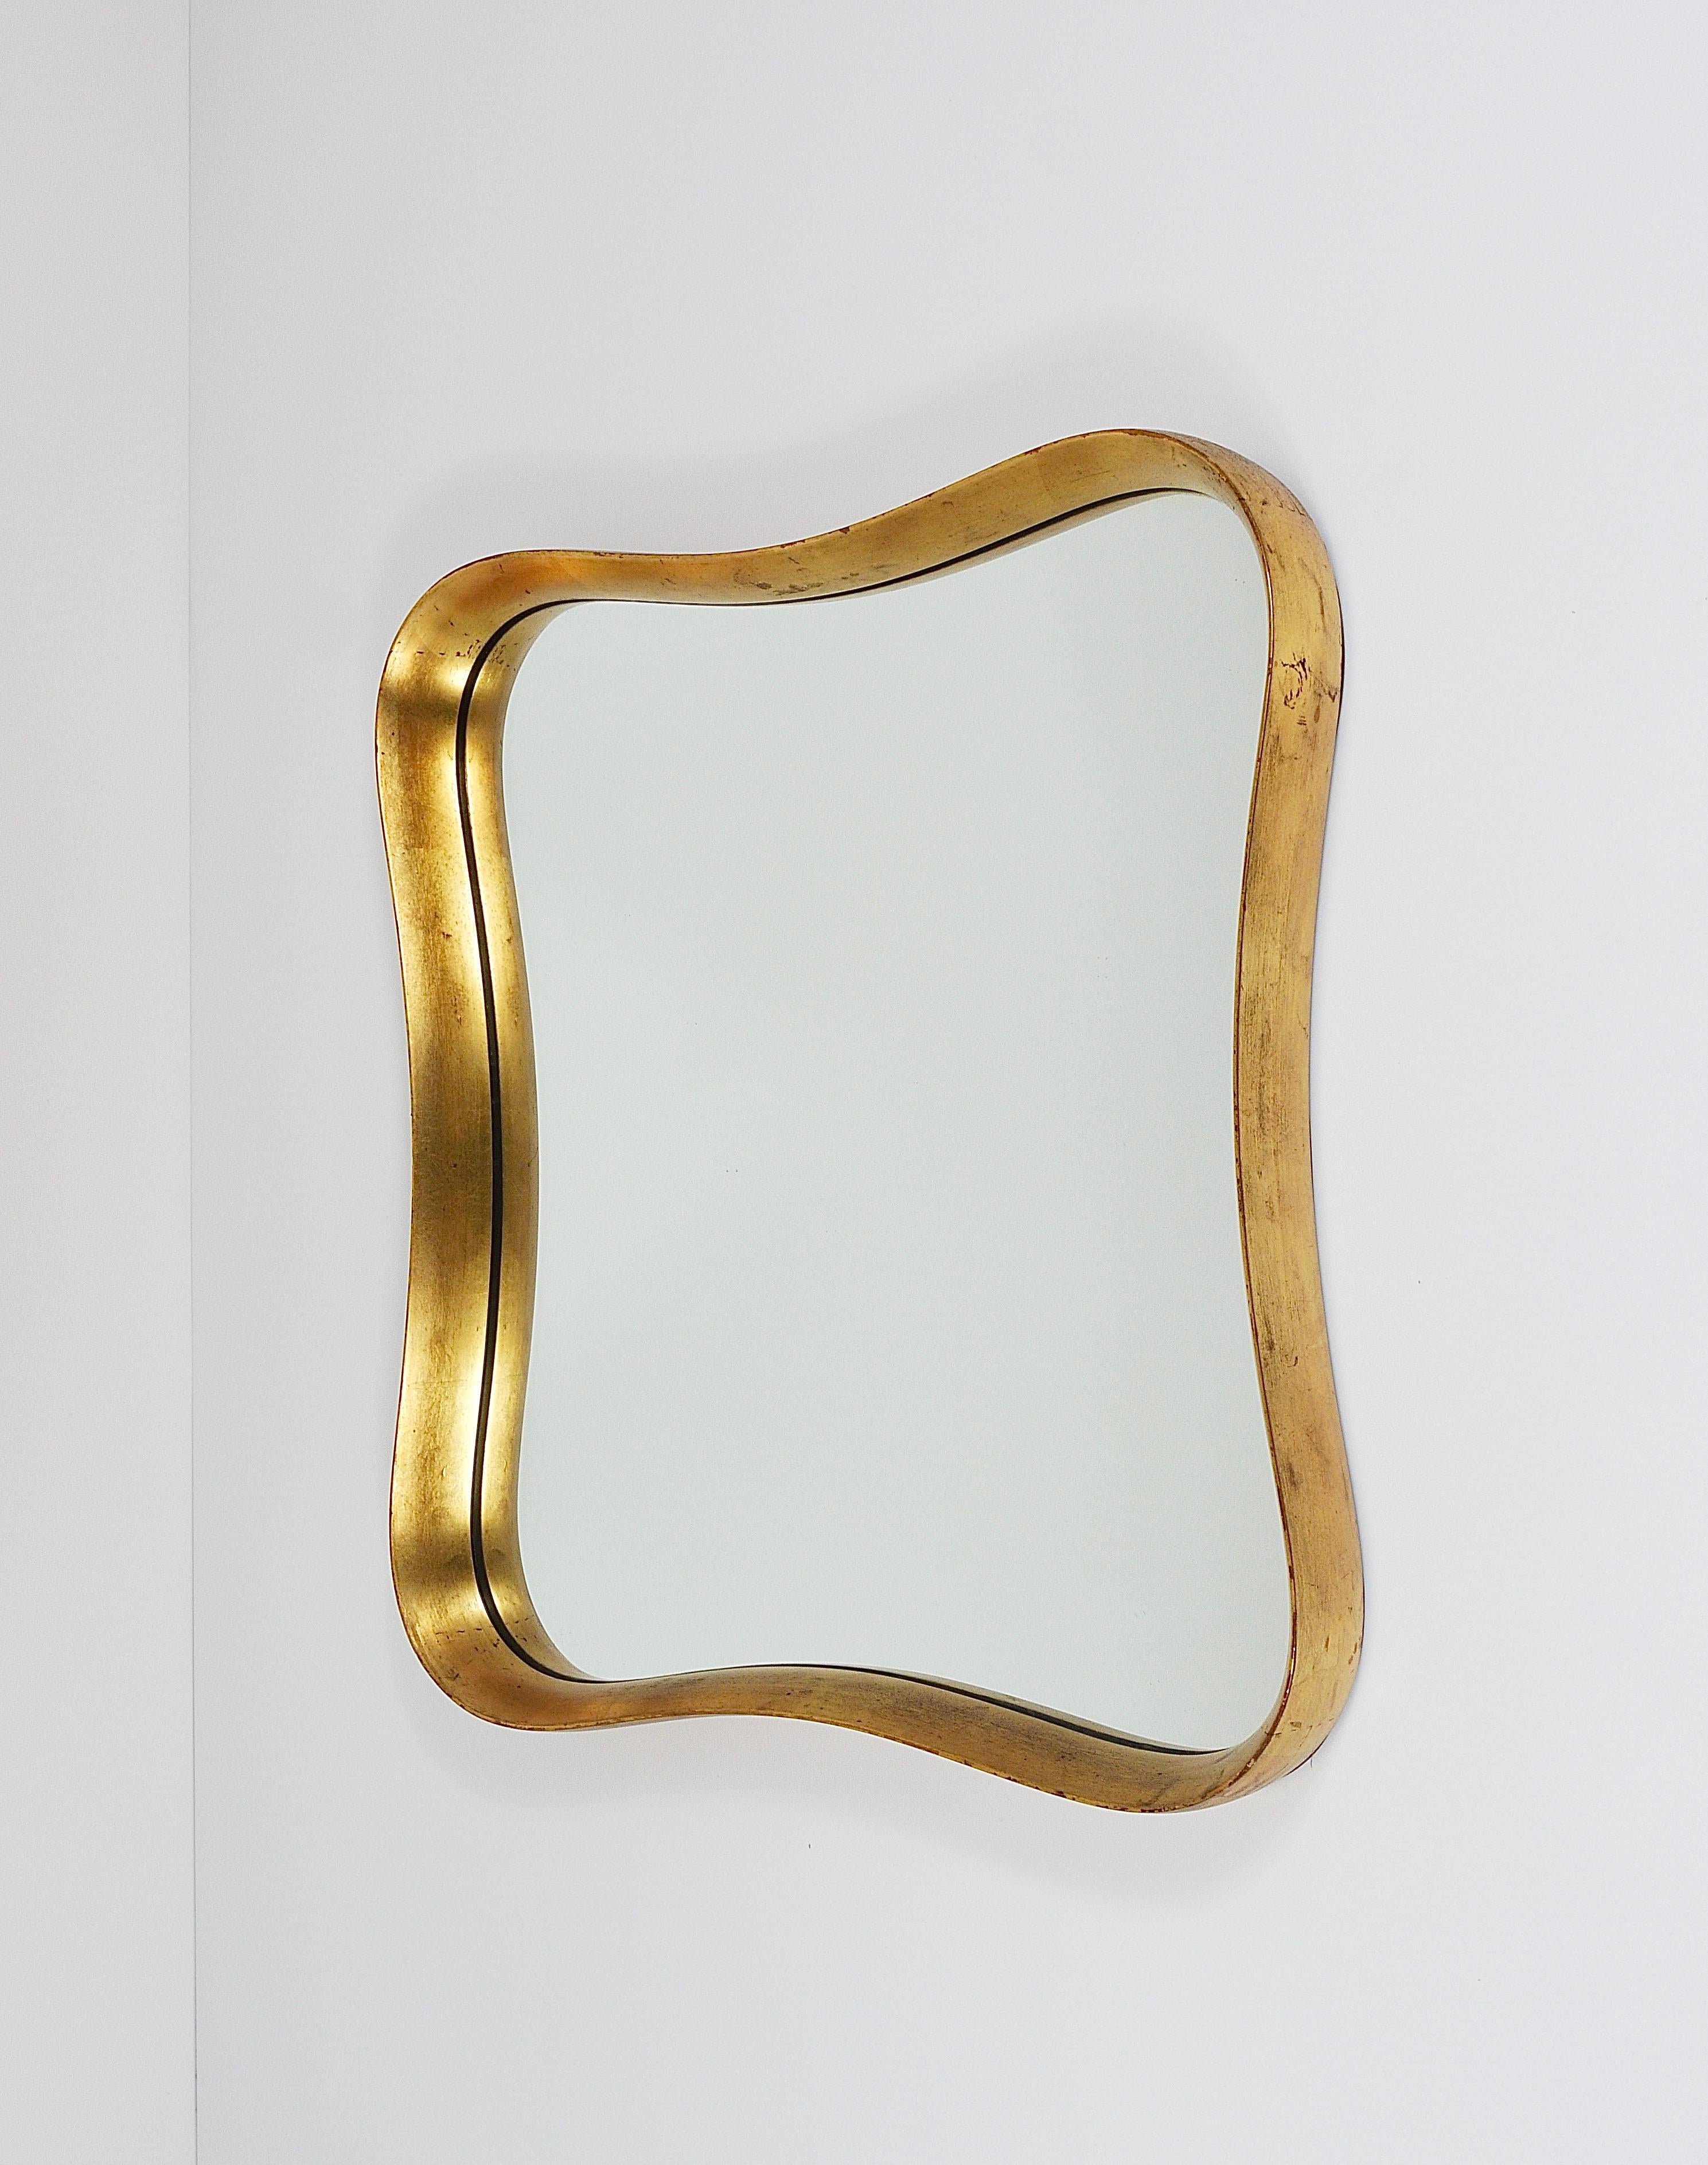 Gio Ponti Style Gilt Wood Mirror by Max Welz Vienna, Austria, 1940s For Sale 1